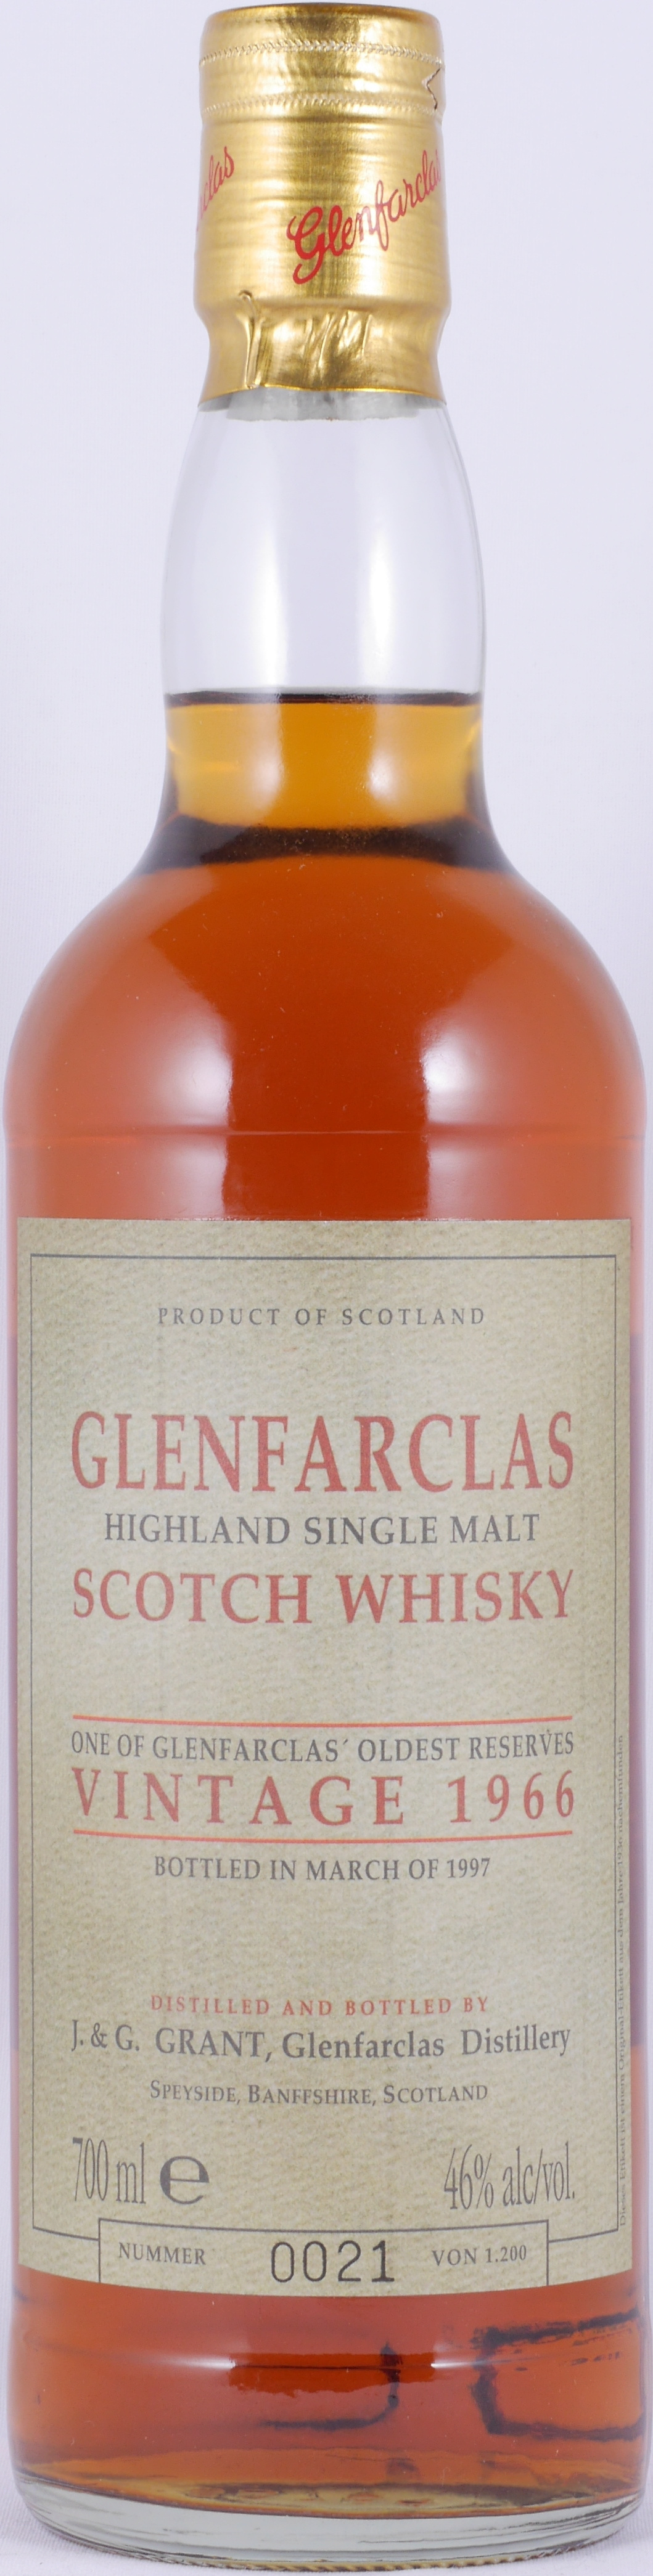 Buy Glenfarclas 1966 31 Years Oldest Reserve Grey Label Limited Edition  Highland Single Malt Scotch Whisky 46.0% ABV at Amcom secure online